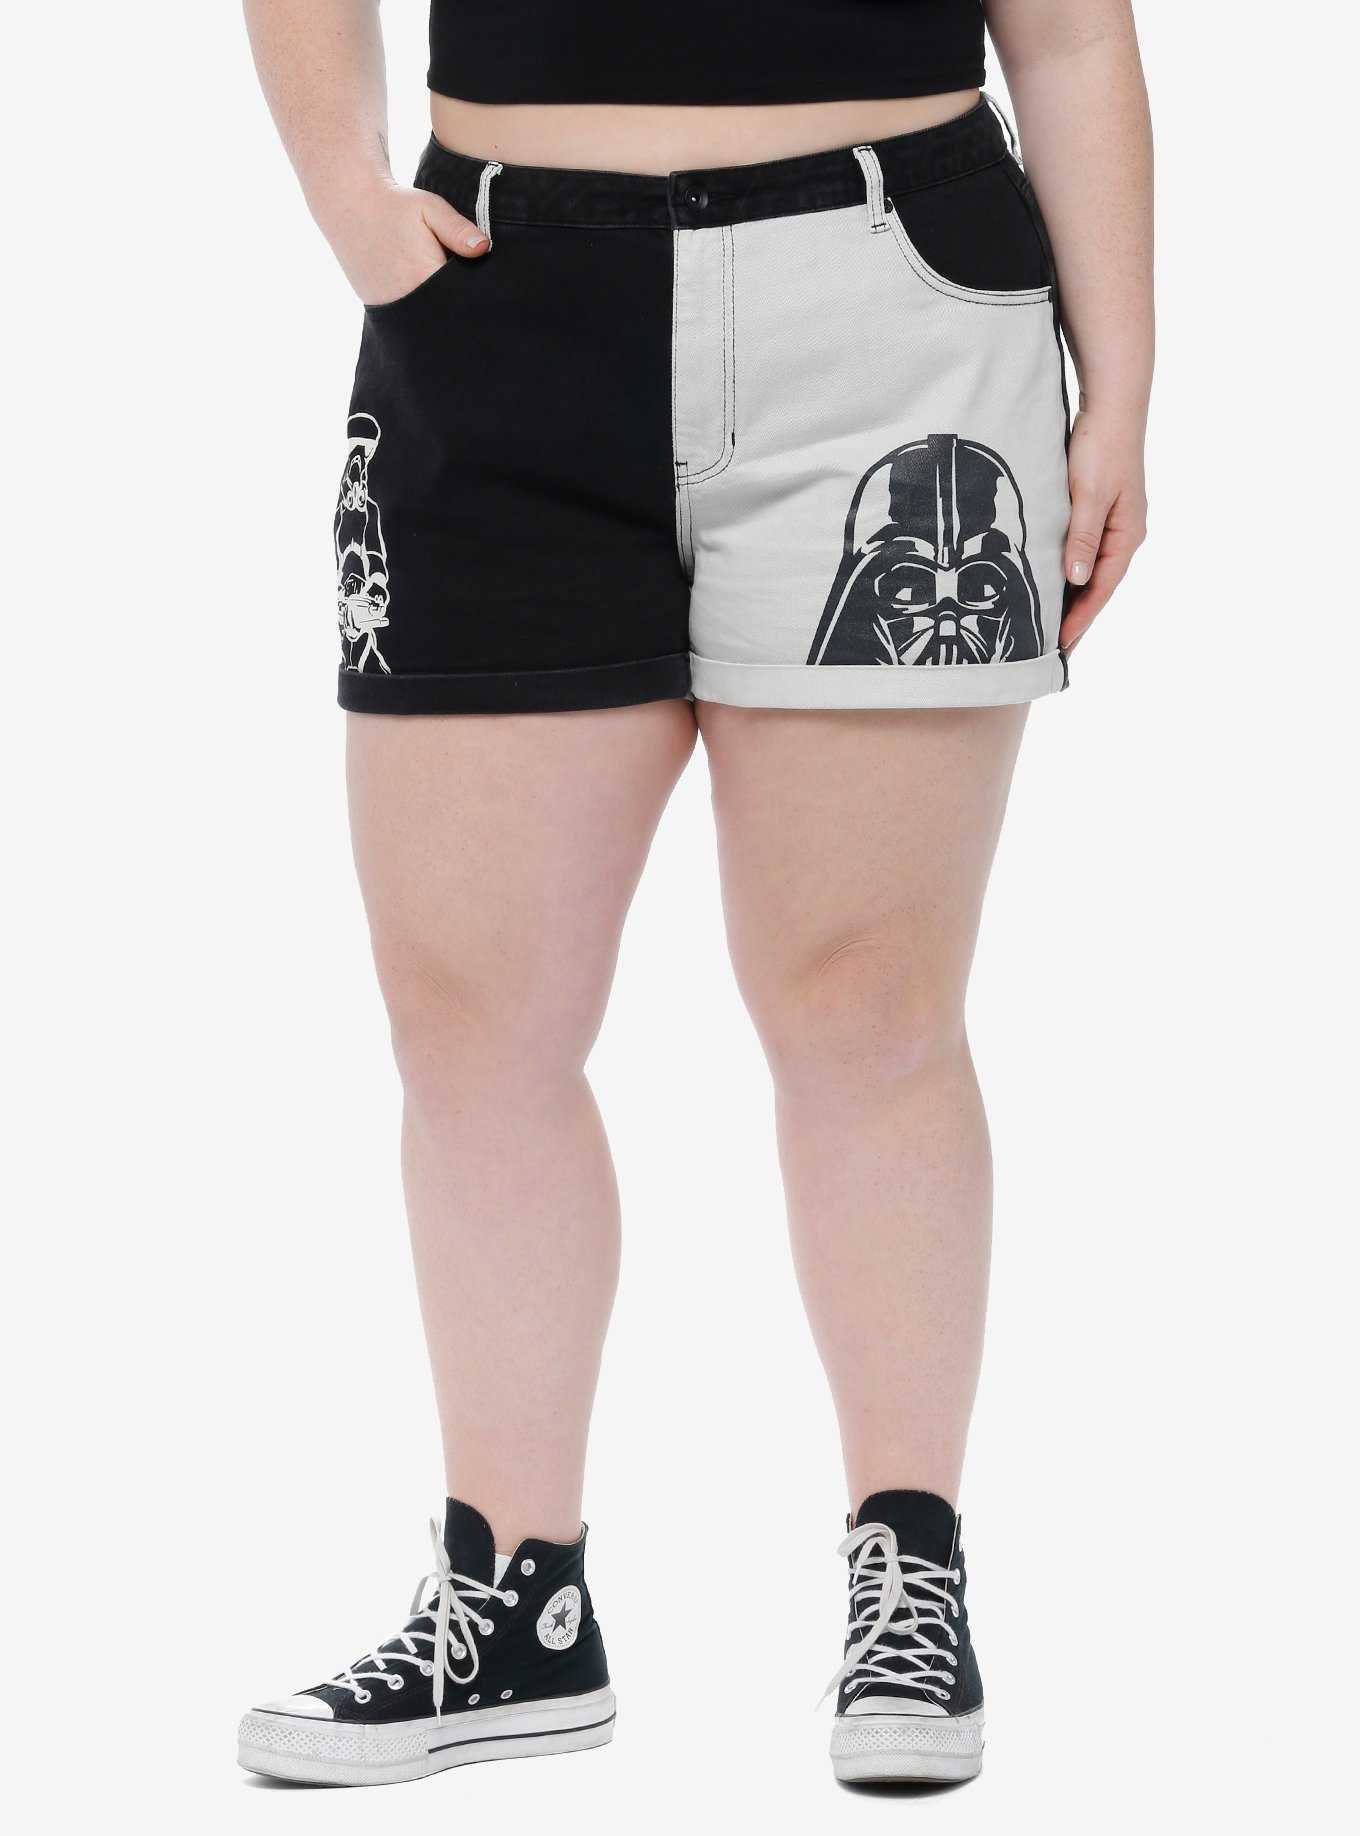 Her Universe Star Wars Vader Stormtrooper Split Mom Shorts Plus Size Her Universe Exclusive, , hi-res